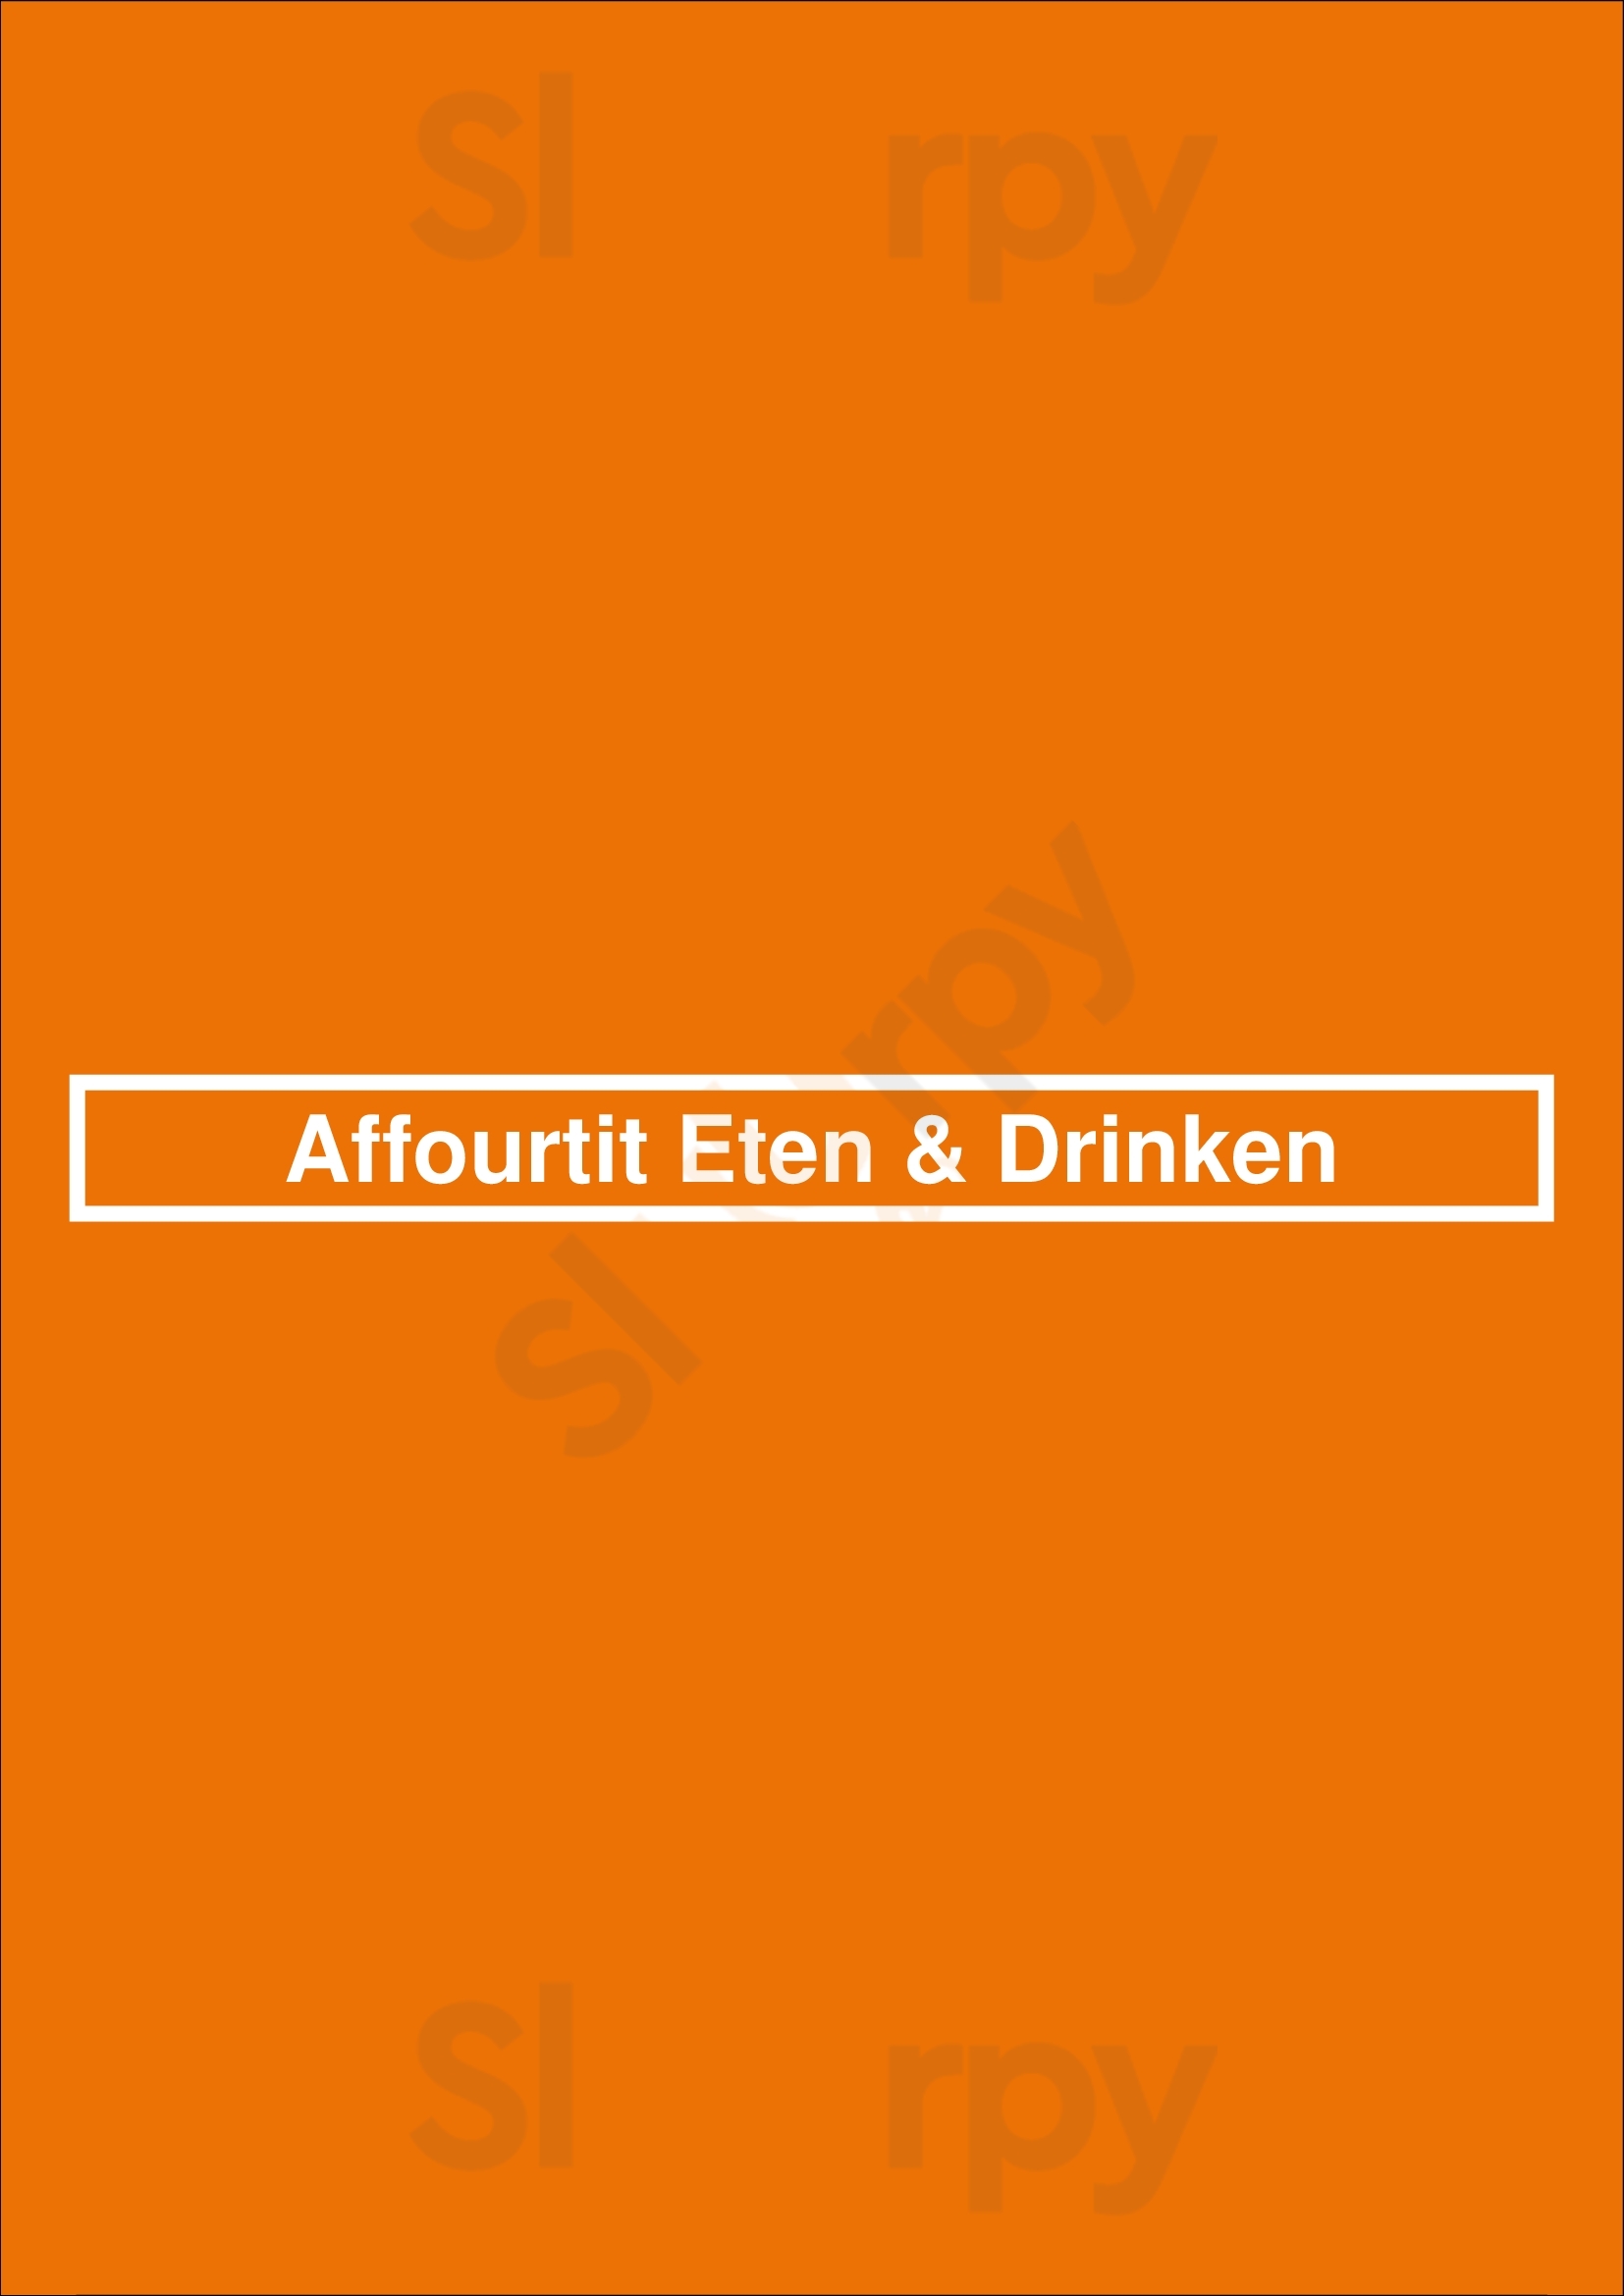 Affourtit Eten & Drinken Amsterdam Menu - 1